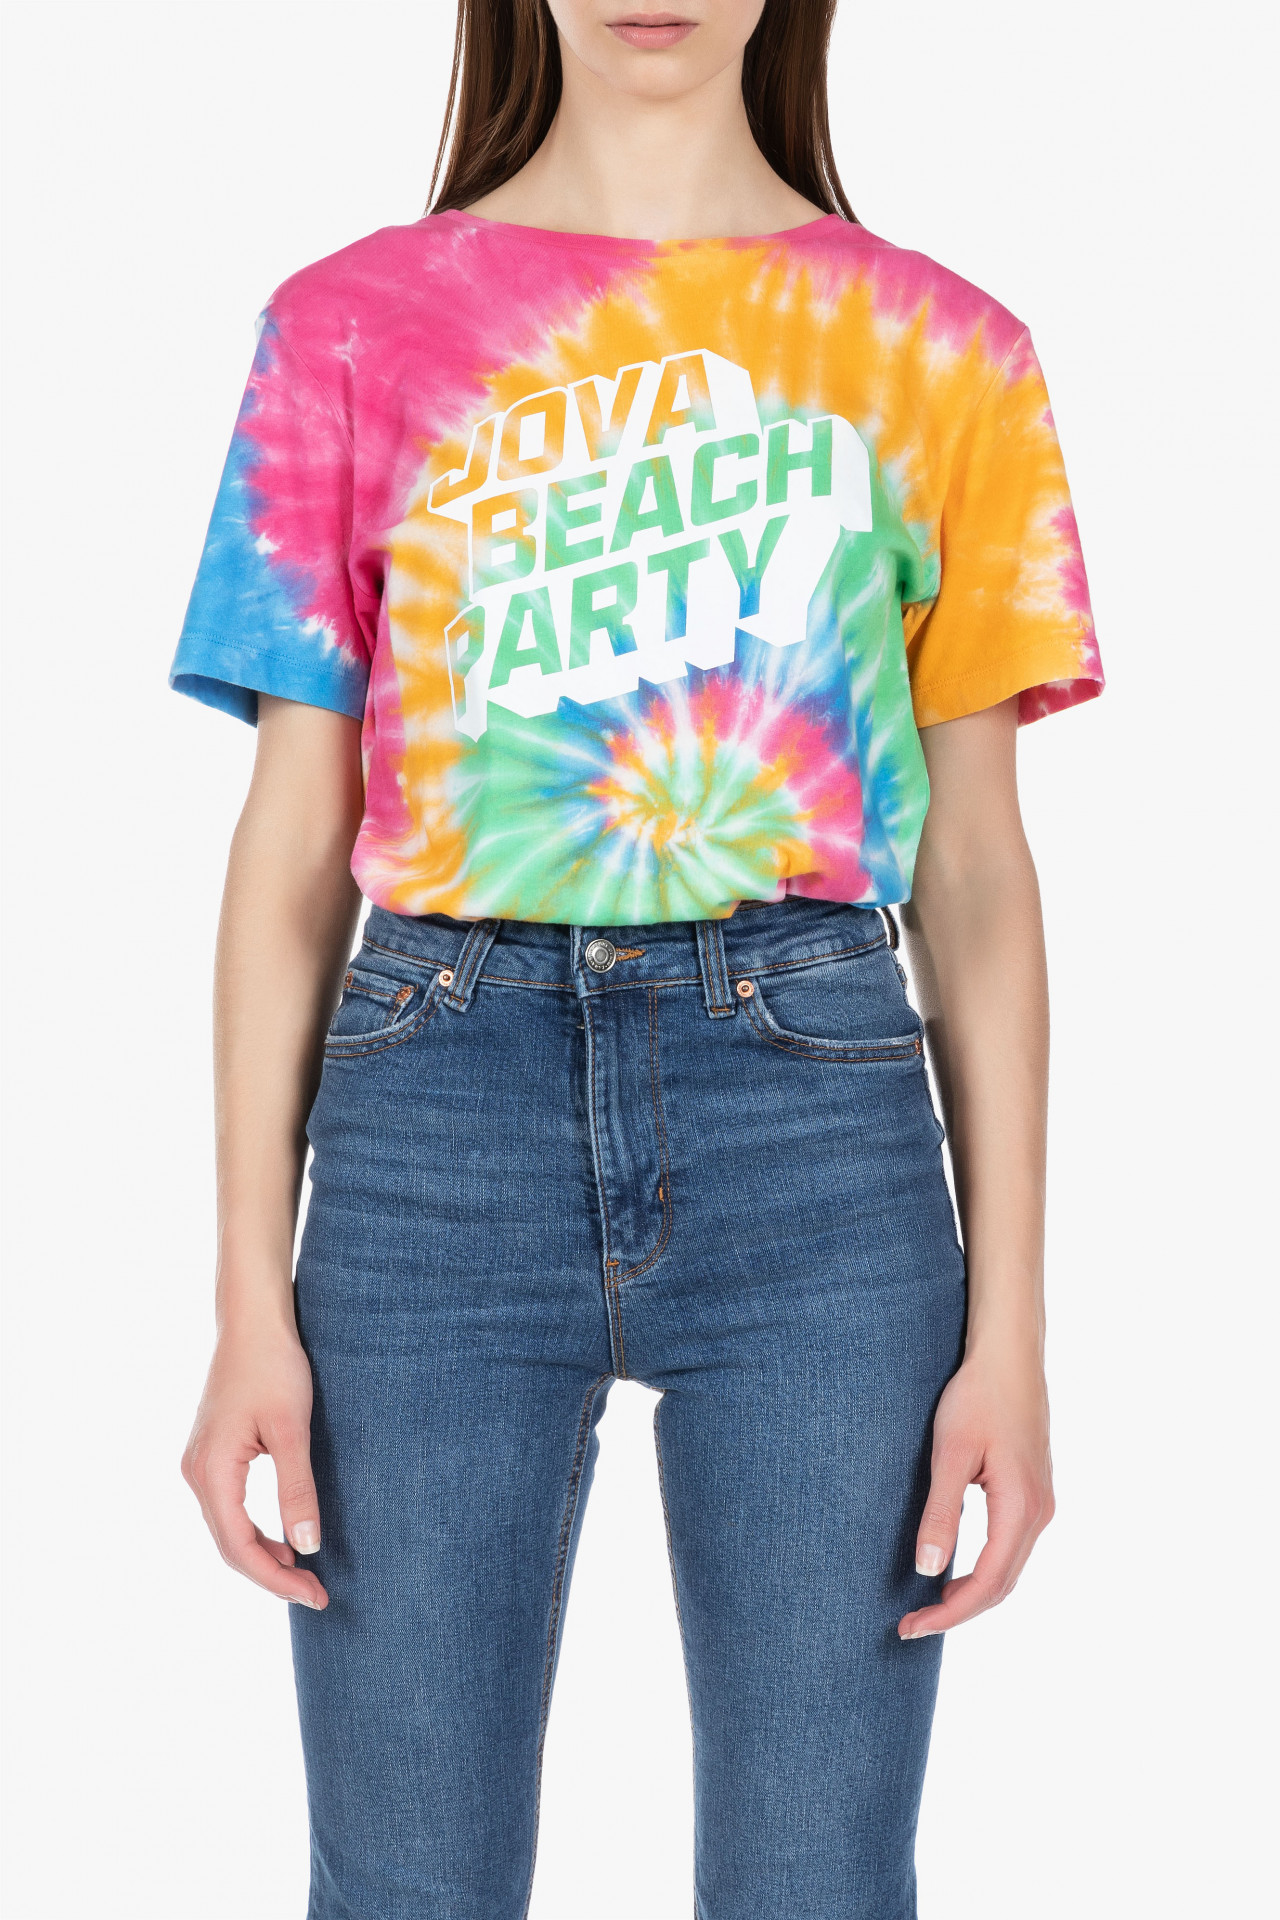 T-Shirt Tie Dye Jova Beach Party